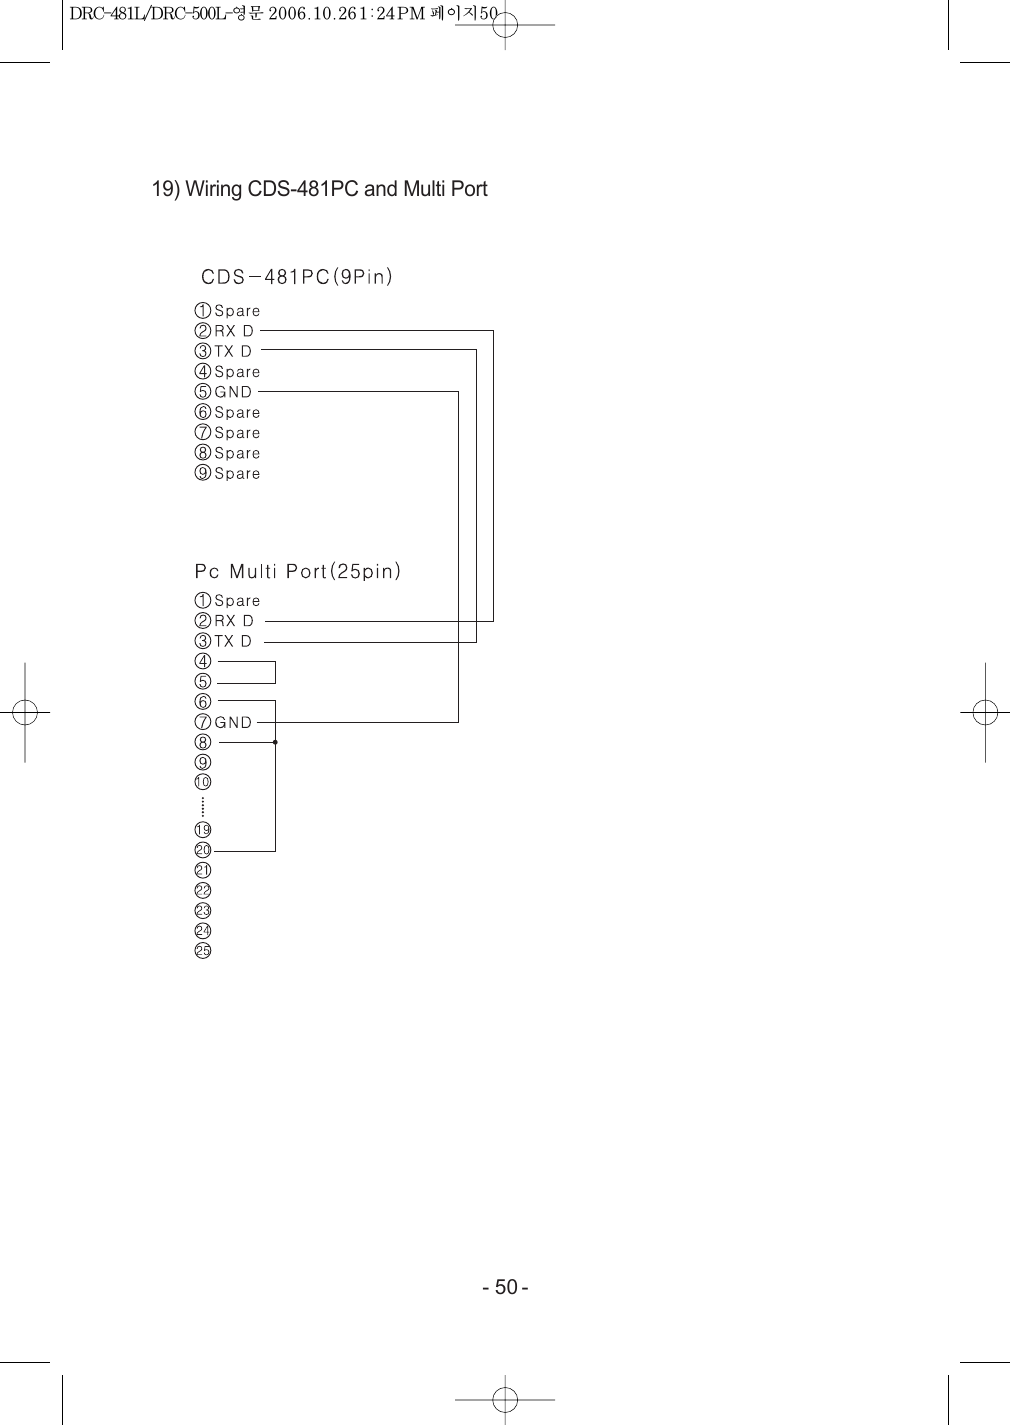 - 50 -19) Wiring CDS-481PC and Multi PortDRC-481L/DRC-500L-영 문   2006.10.26 1:24 PM  페이지50